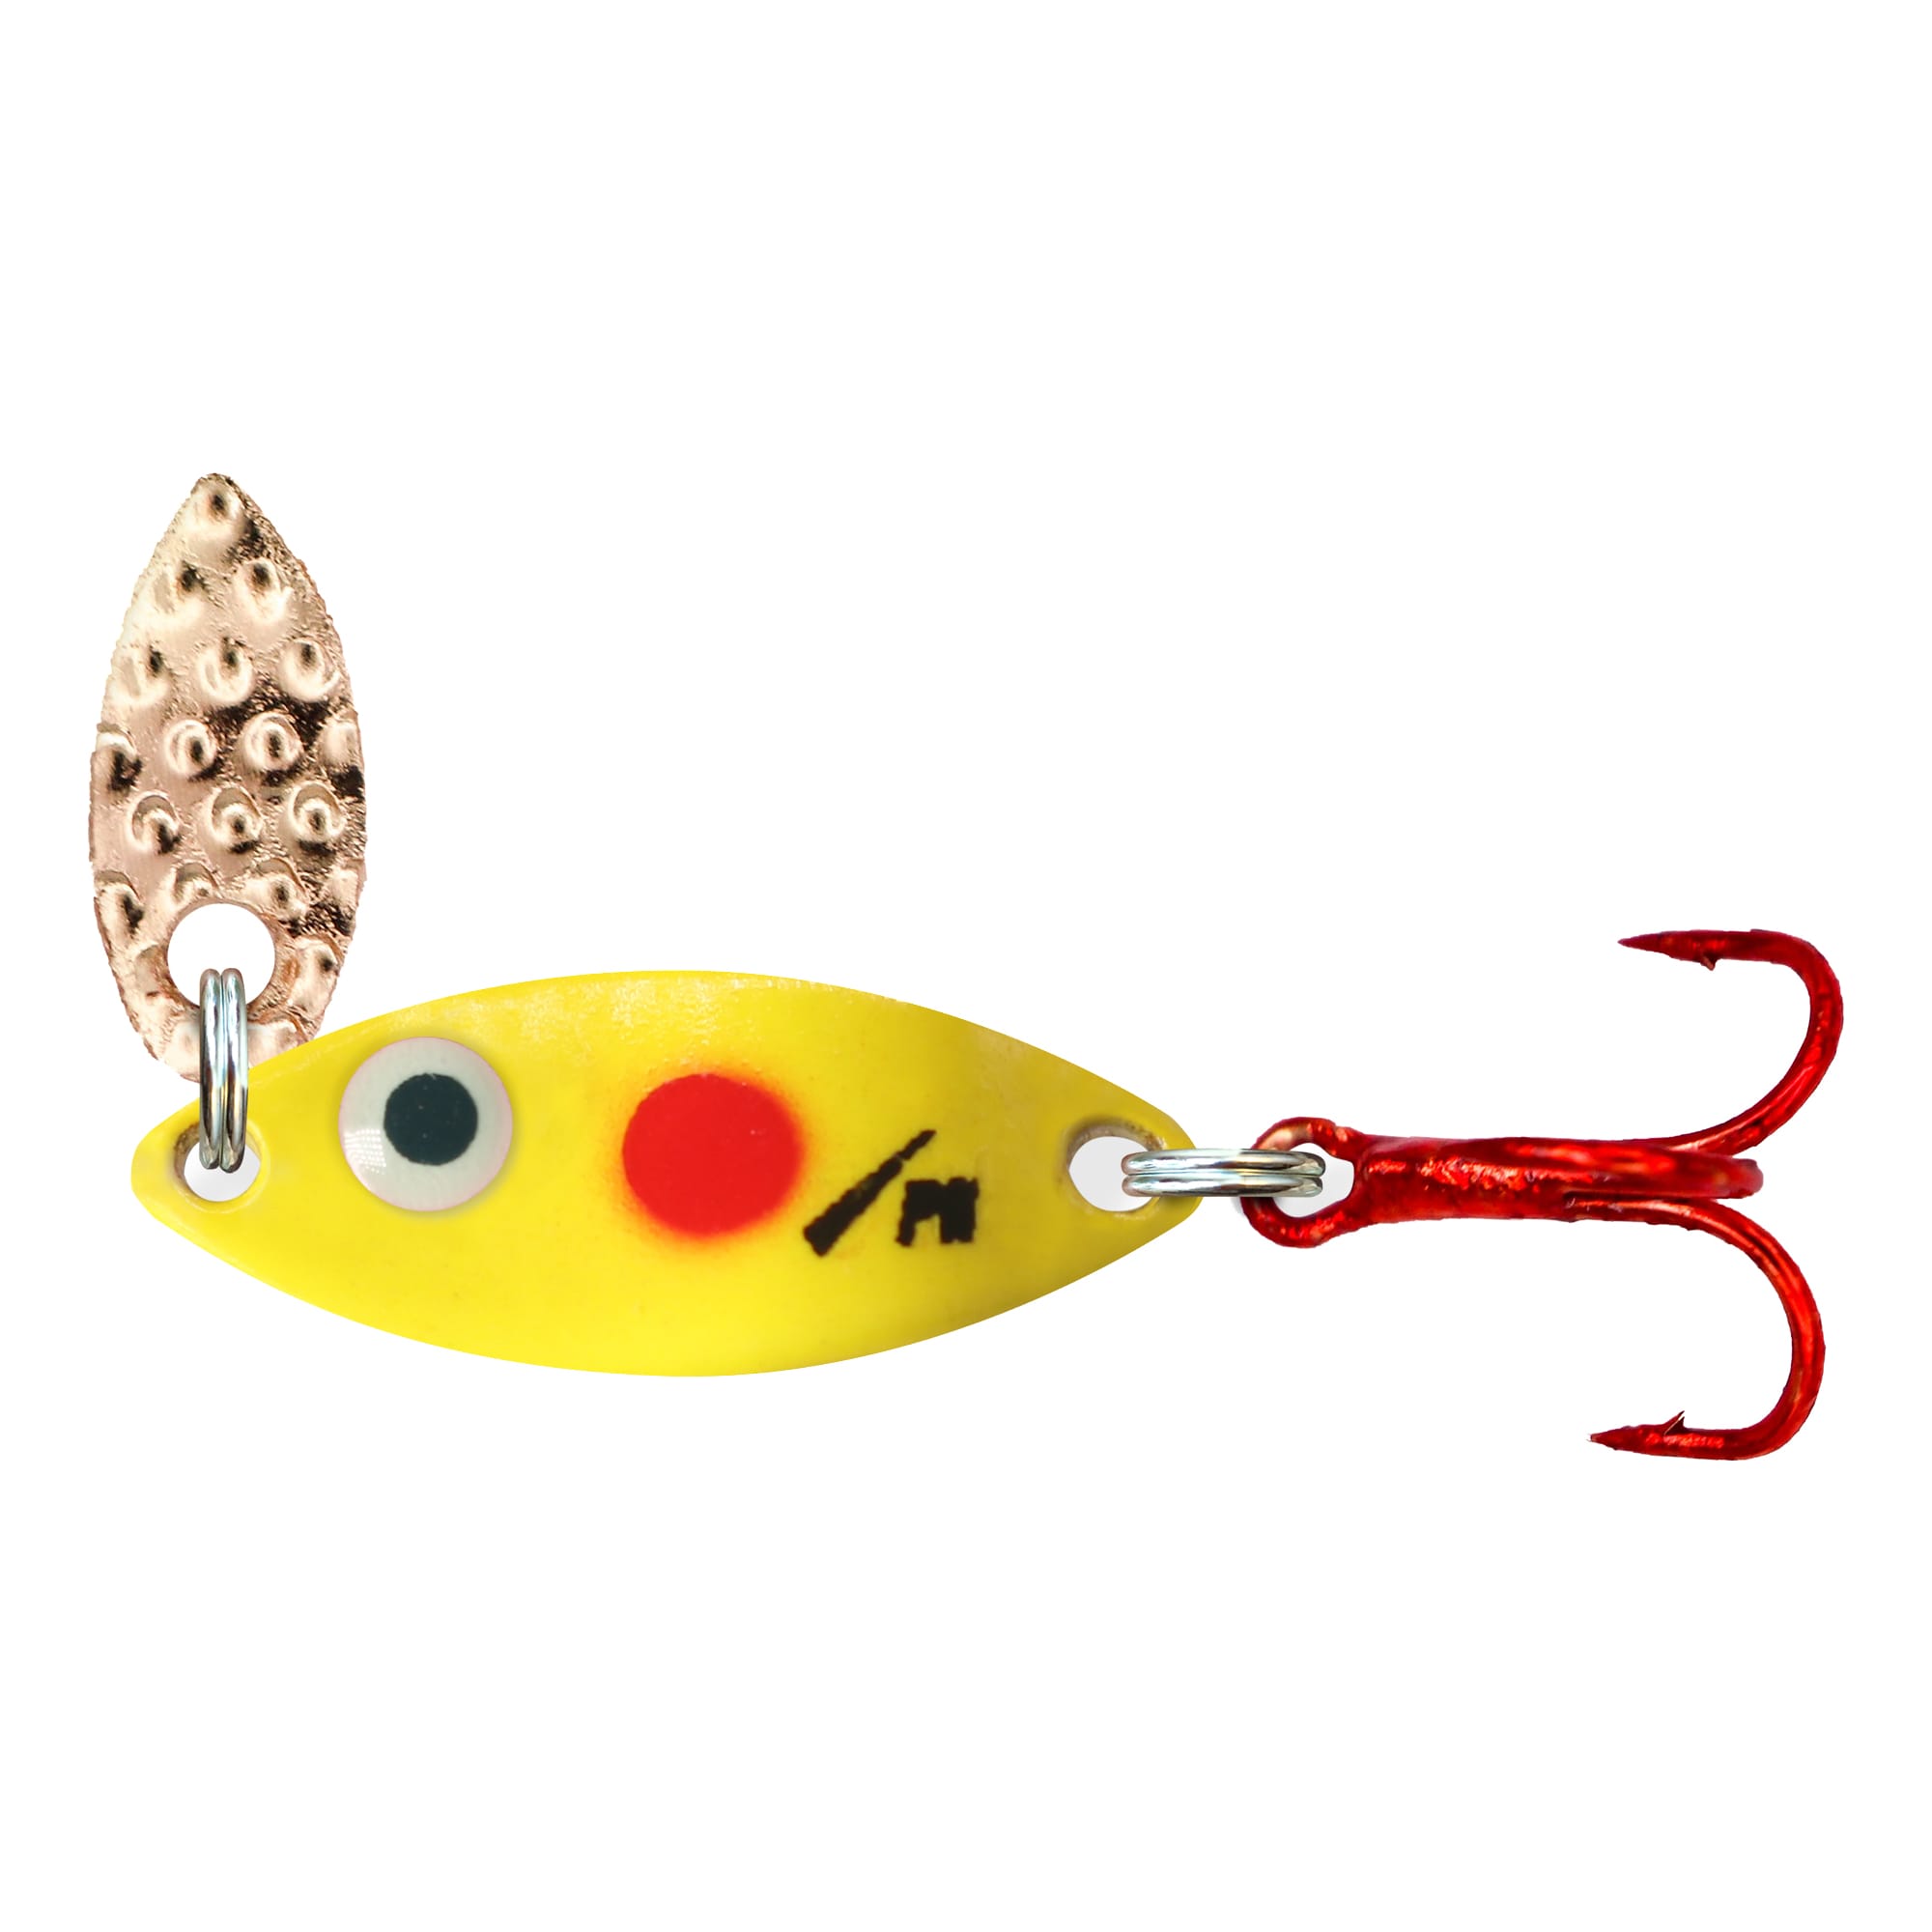 PK Predator Tungsten Flash Fishing Spoon - Yellow Glow Orange Dot,PK Predator Tungsten Flash Fishing Spoon - Yellow Glow Orange Dot